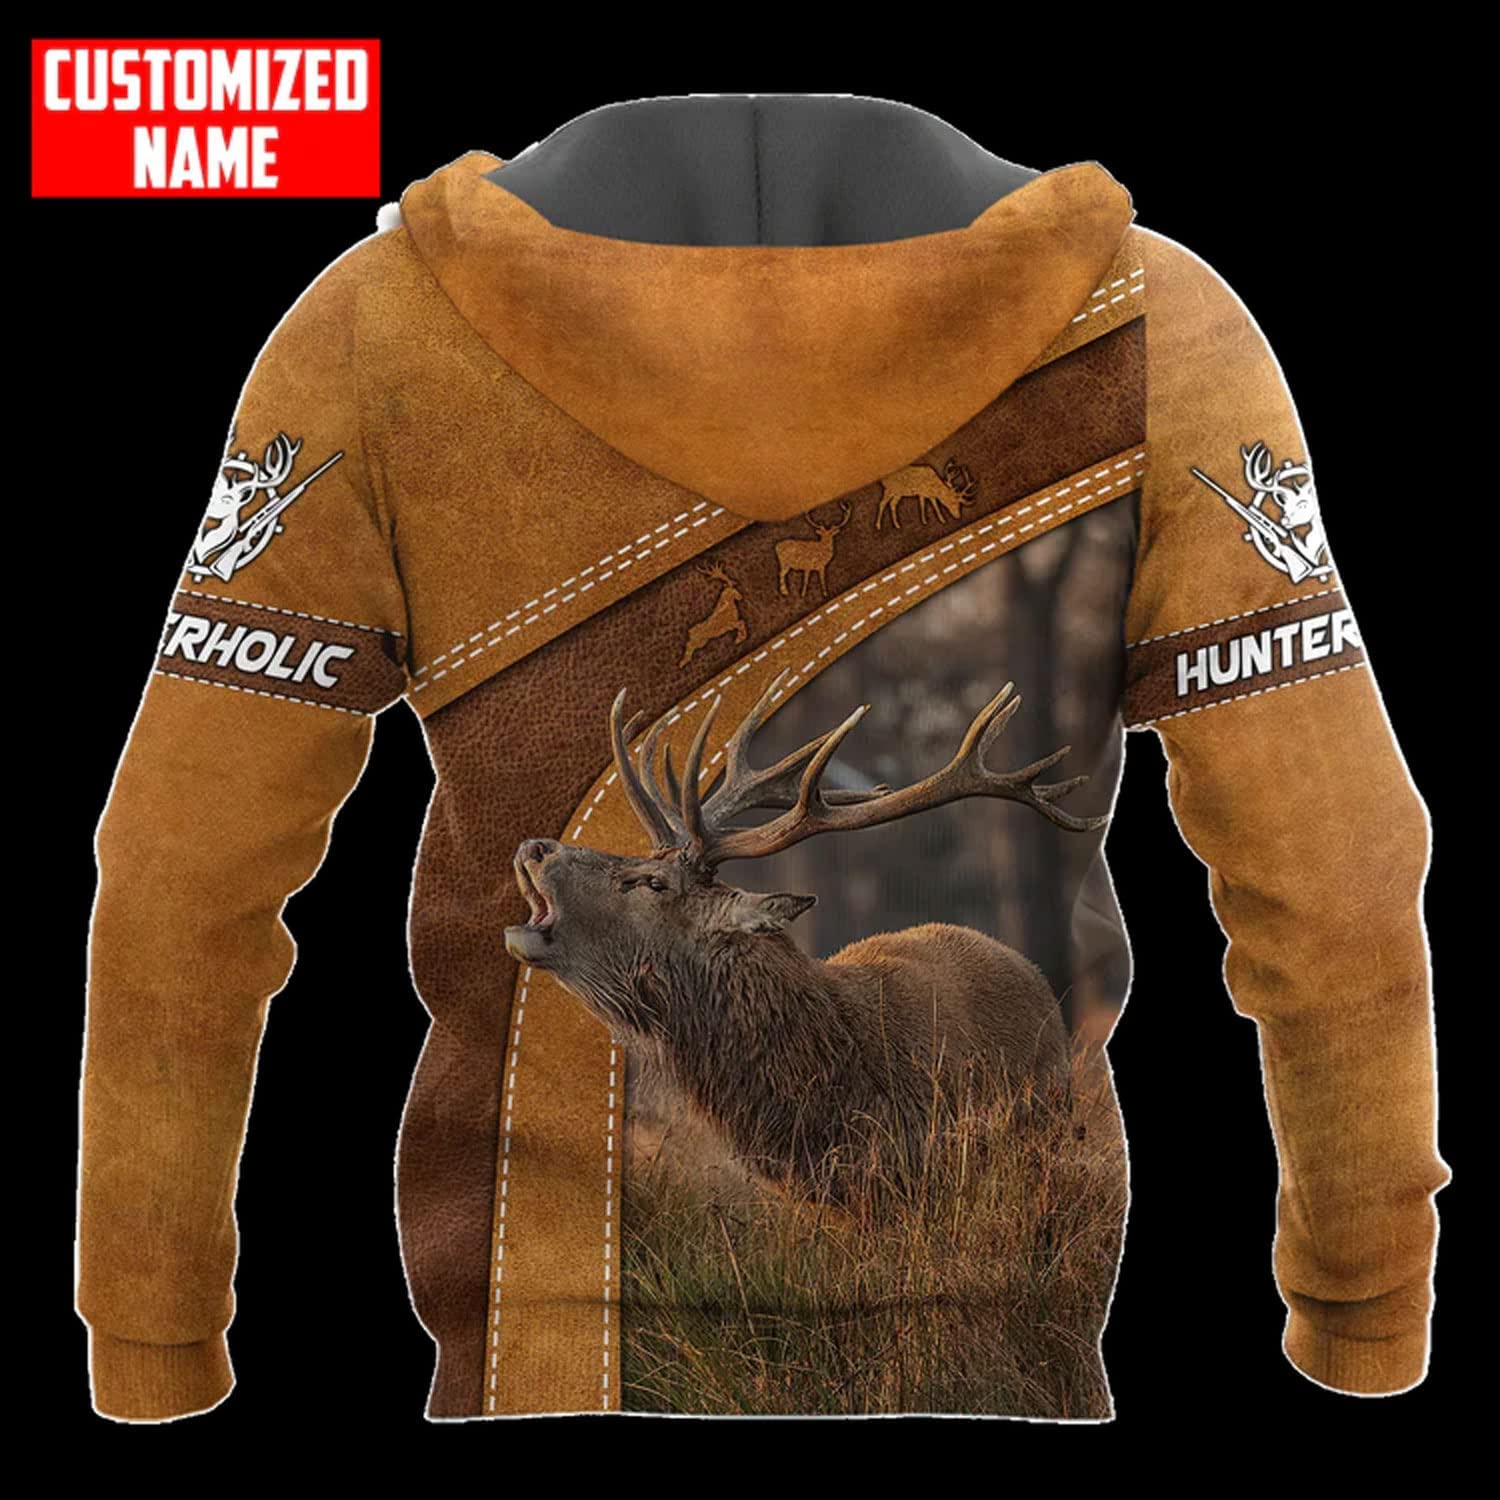 Deer Hunting Apparel: Custom 3D Full Print Hunterholic Shirts for Animal Lovers and Deer Hunters – Perfect Gift for Family Members. Available in Pullover Hoodie, Hawaiian Shirt, and Sweatshirt Variants. – JOT1508